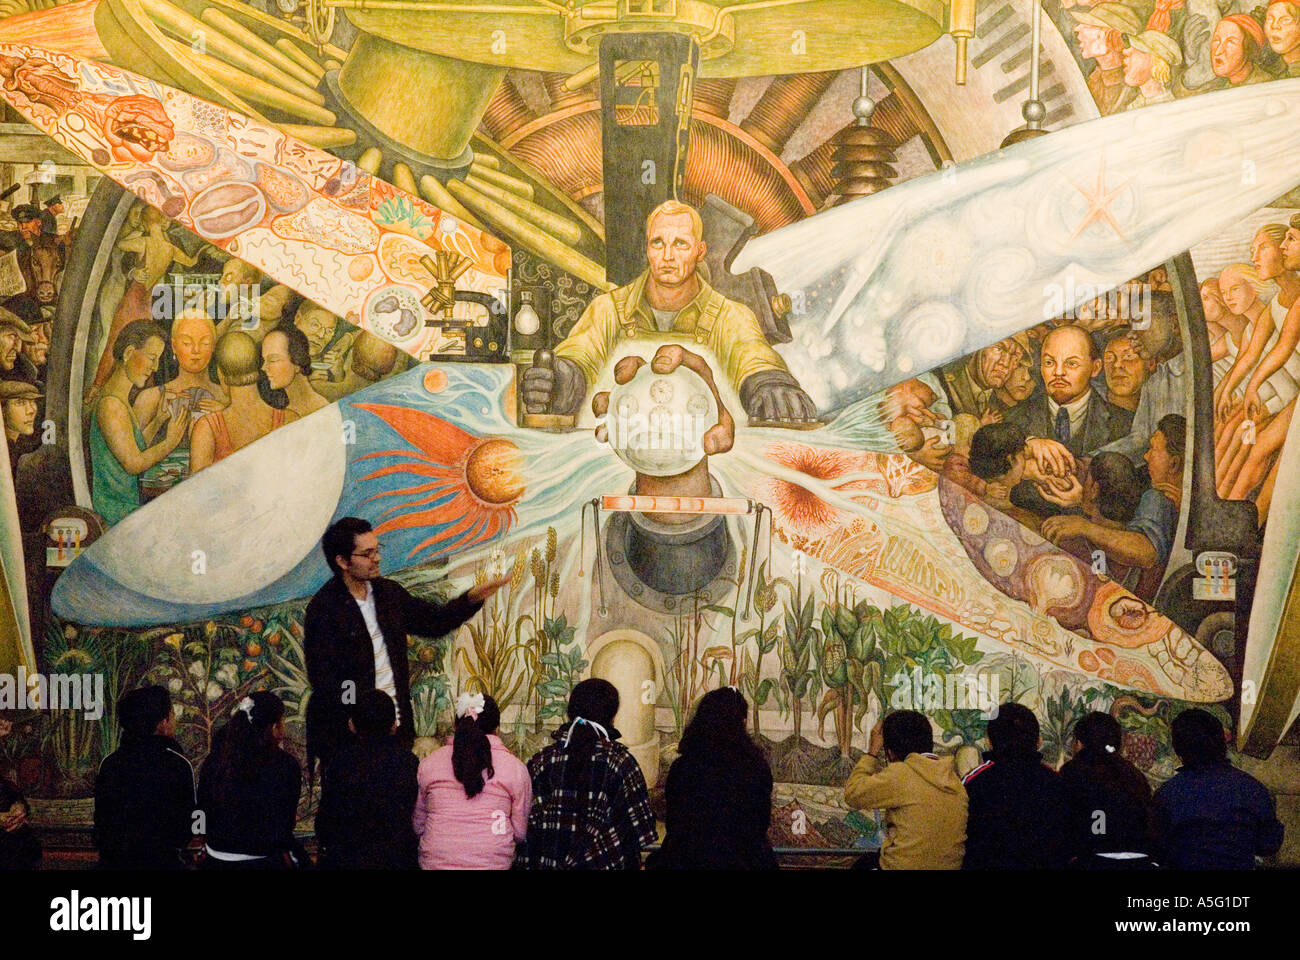 man explain to children diego rivera mural - bellas artes palace - mexico city Stock Photo